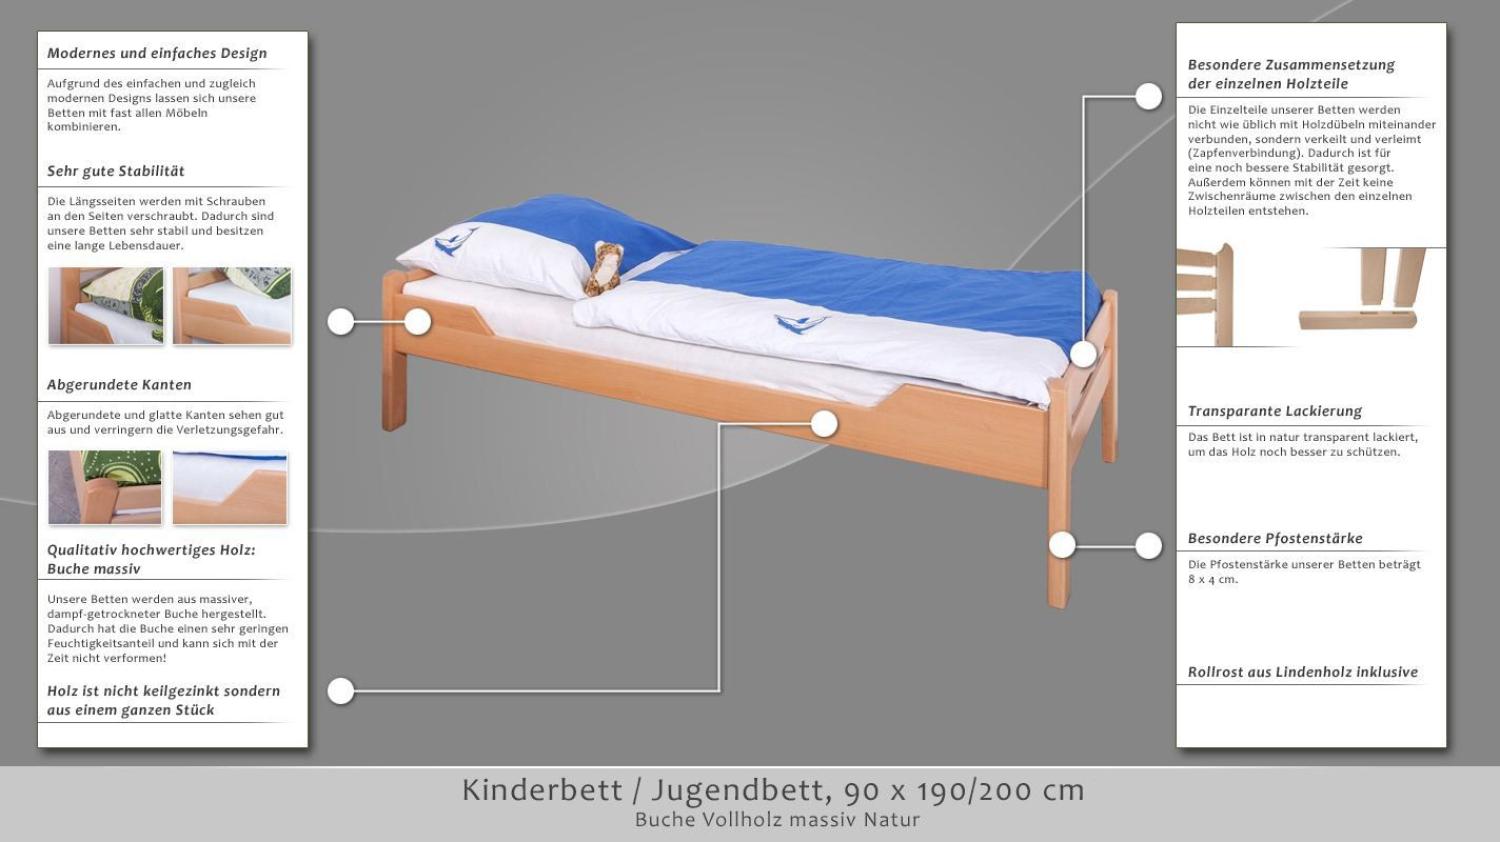 Jugendbett Easy Premium Line K1/1n, Buche Vollholz massiv Natur - Maße: 90 x 190 cm Bild 1